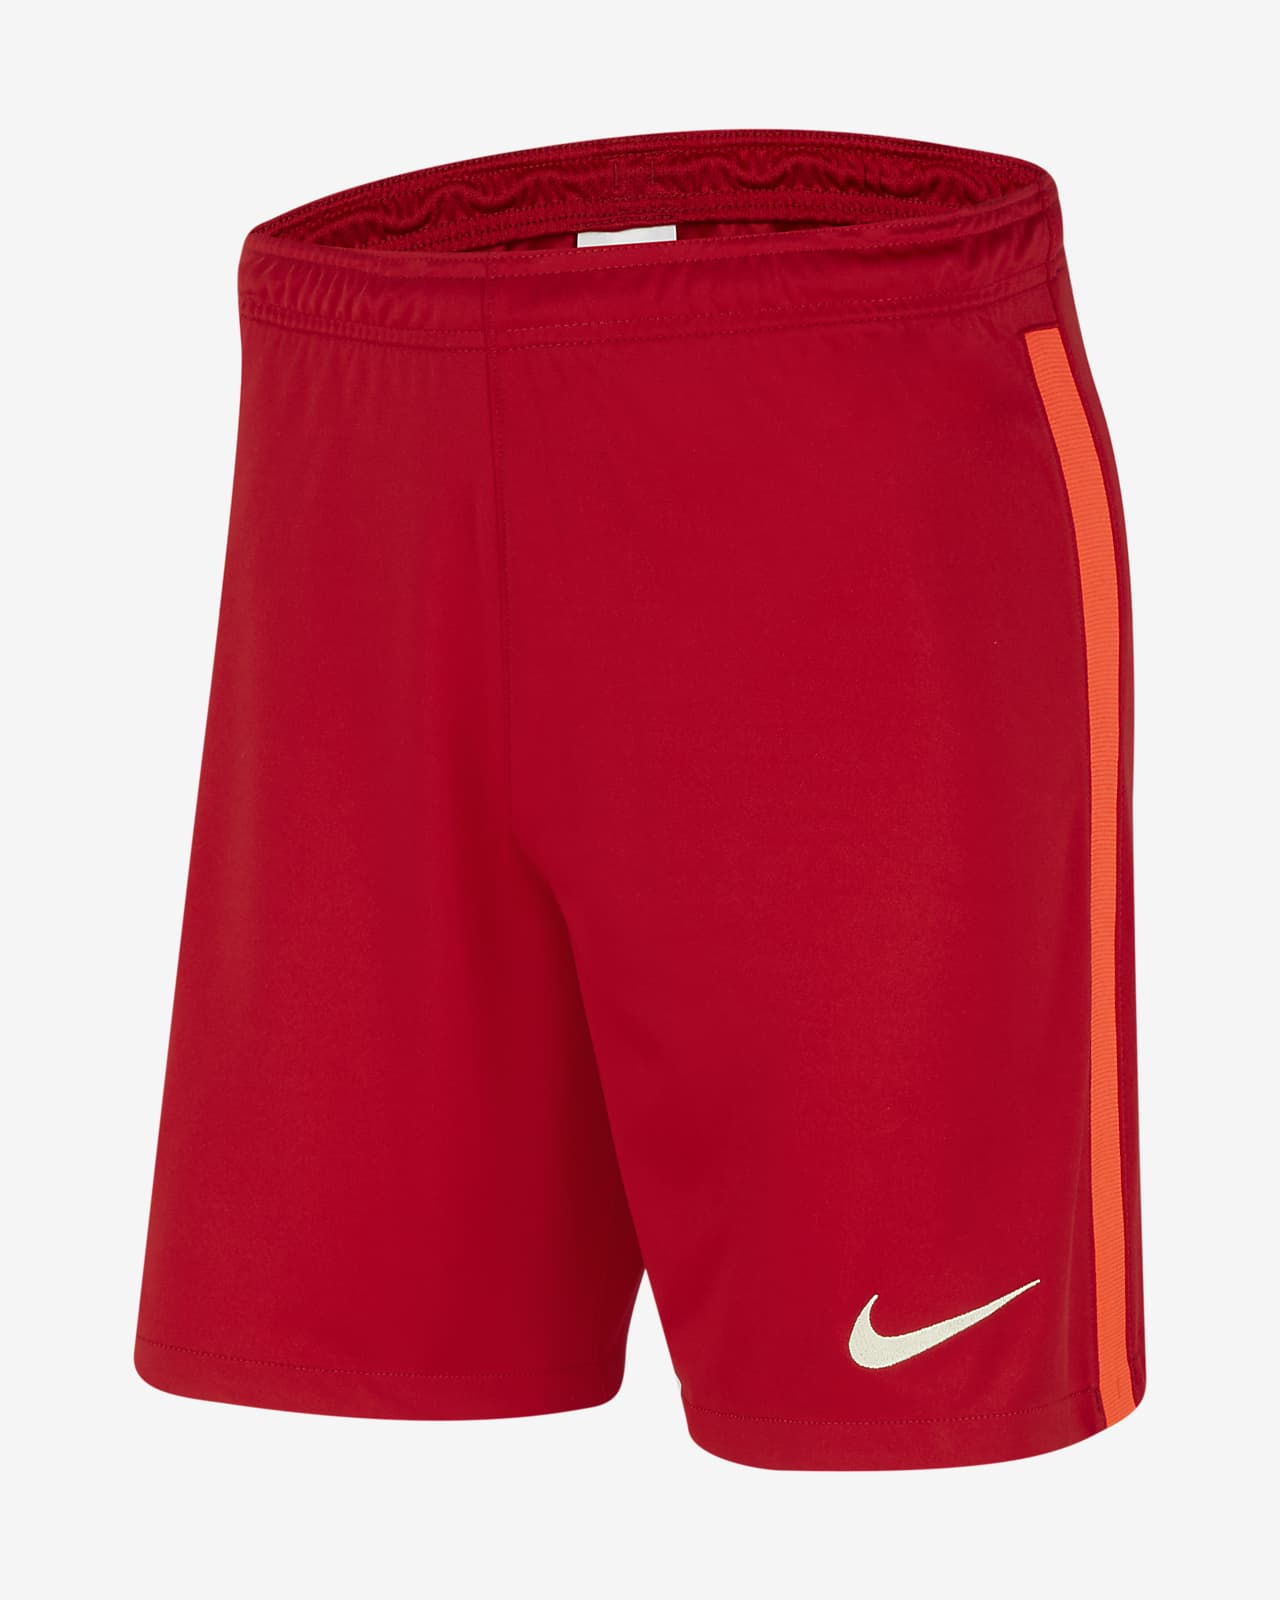 Red Nike Football Shorts Switzerland, 56% - mpgc.net